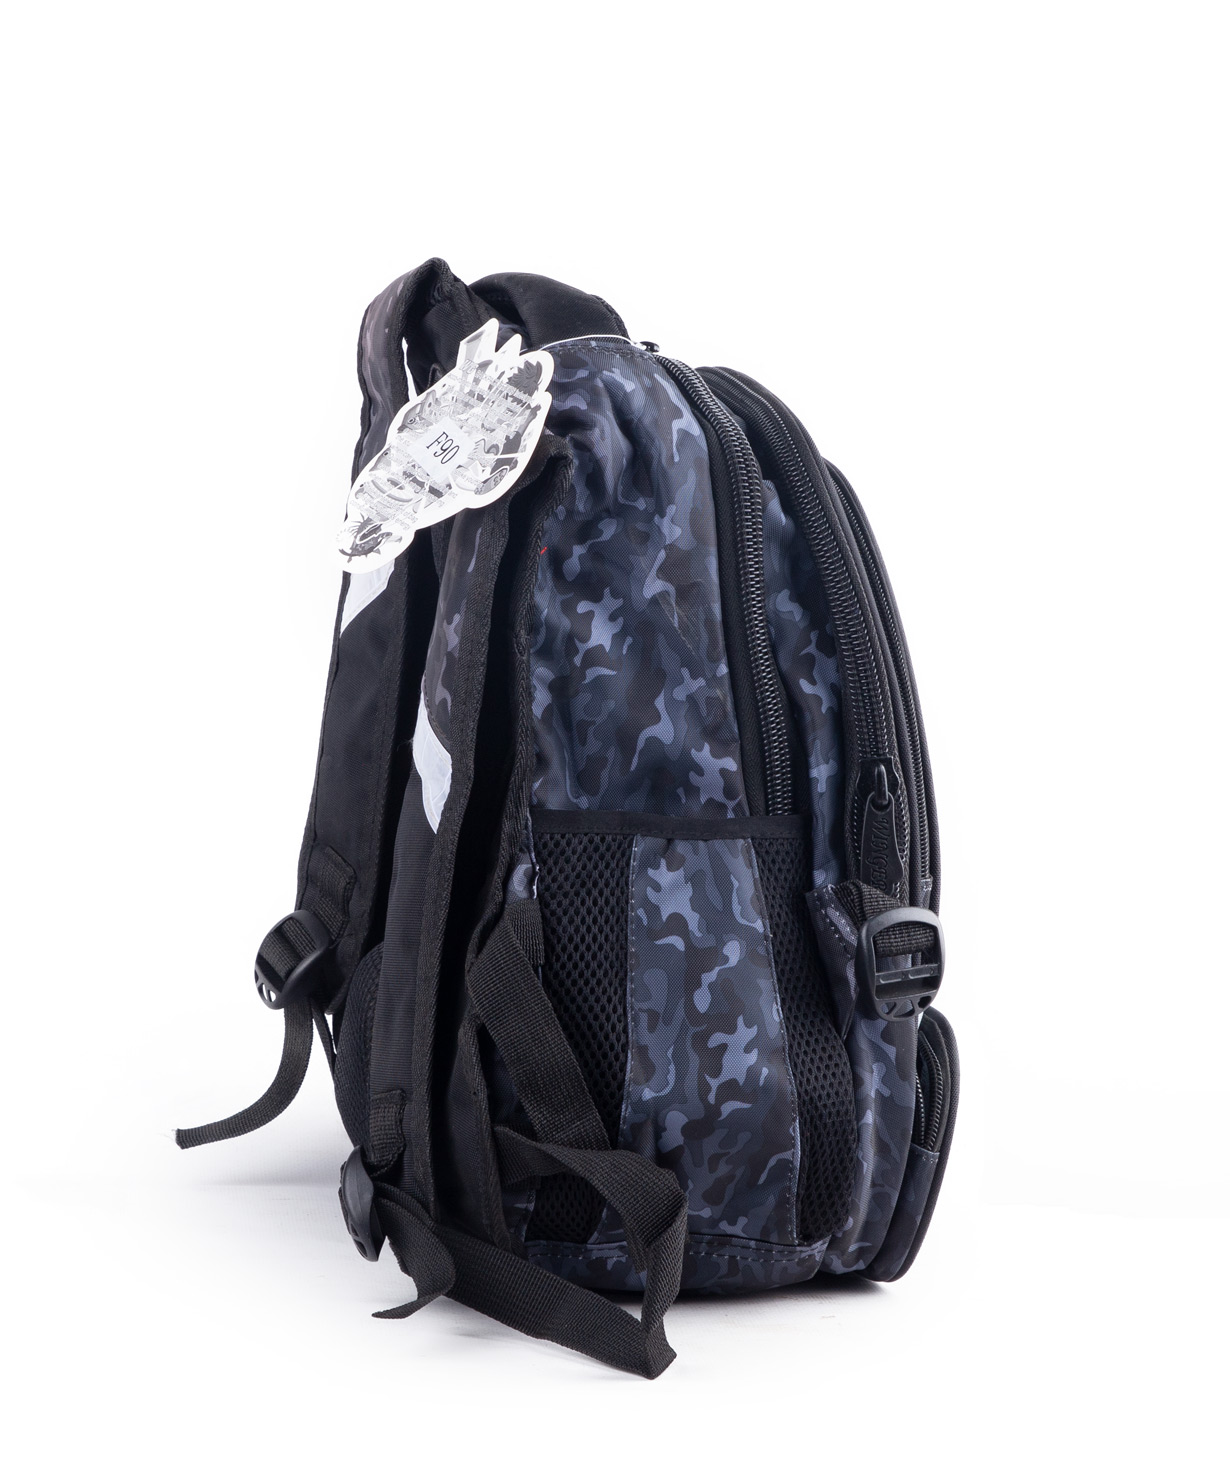 School bag №30